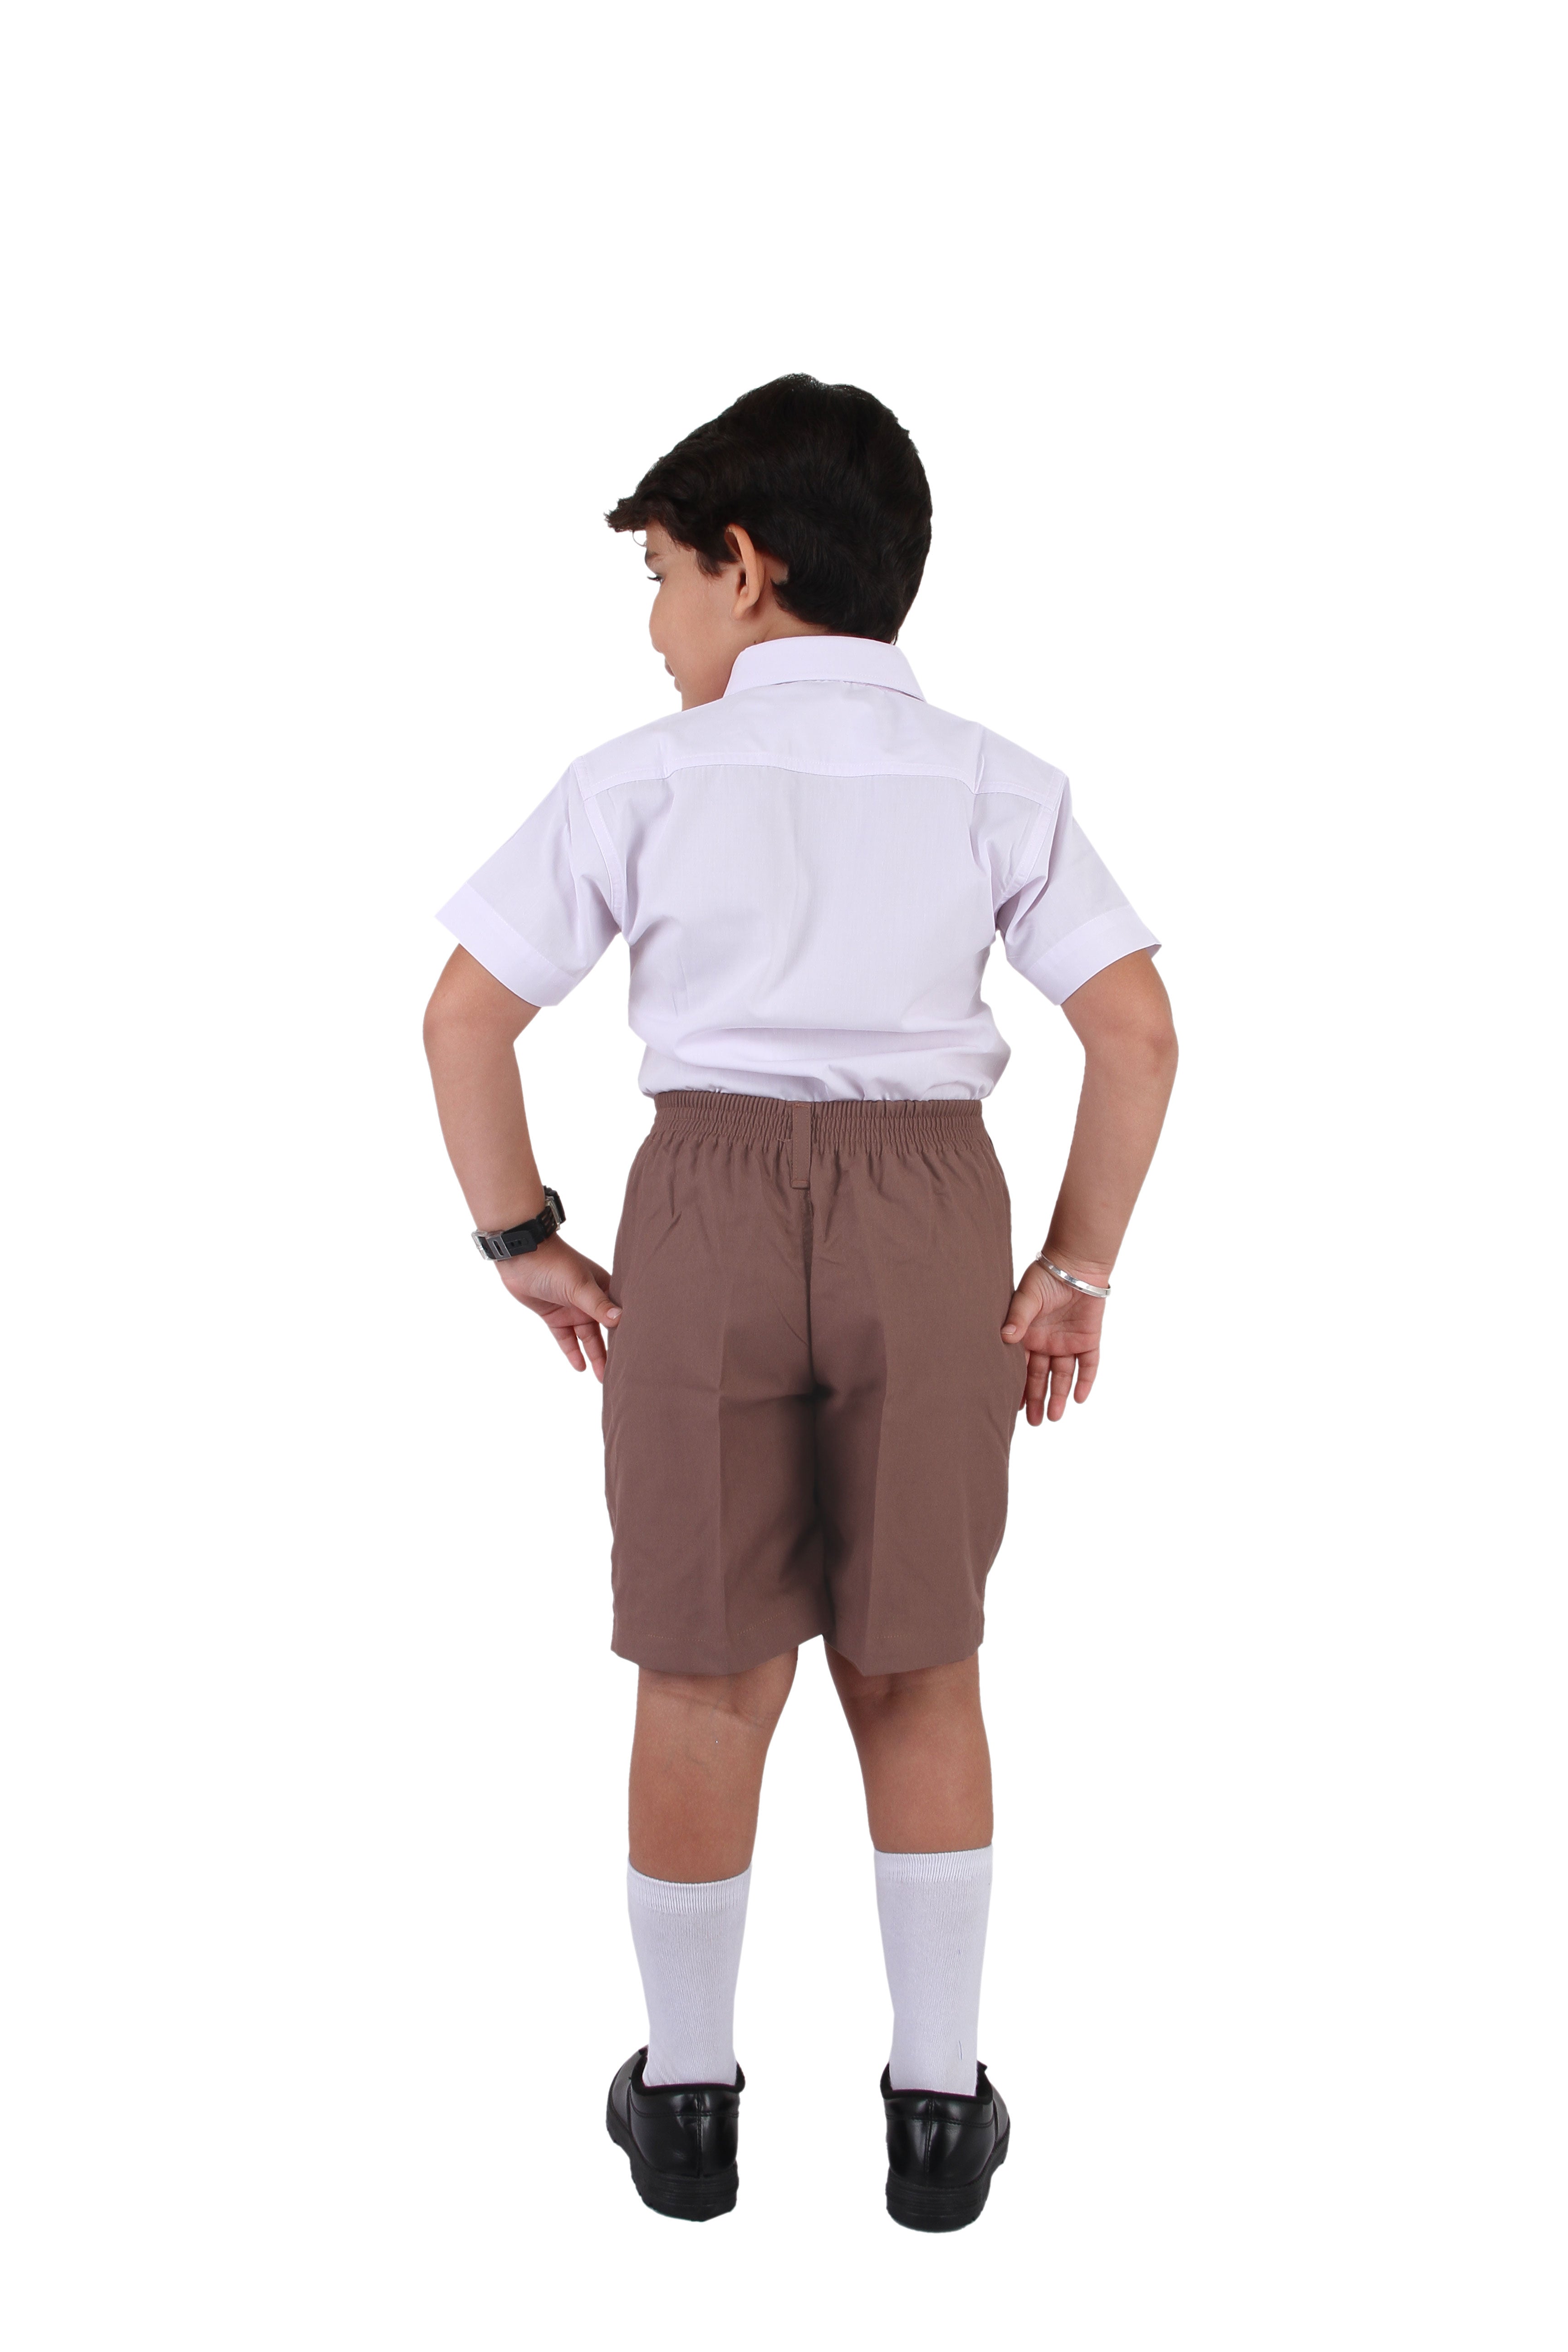 Chocolate Brown Shorts